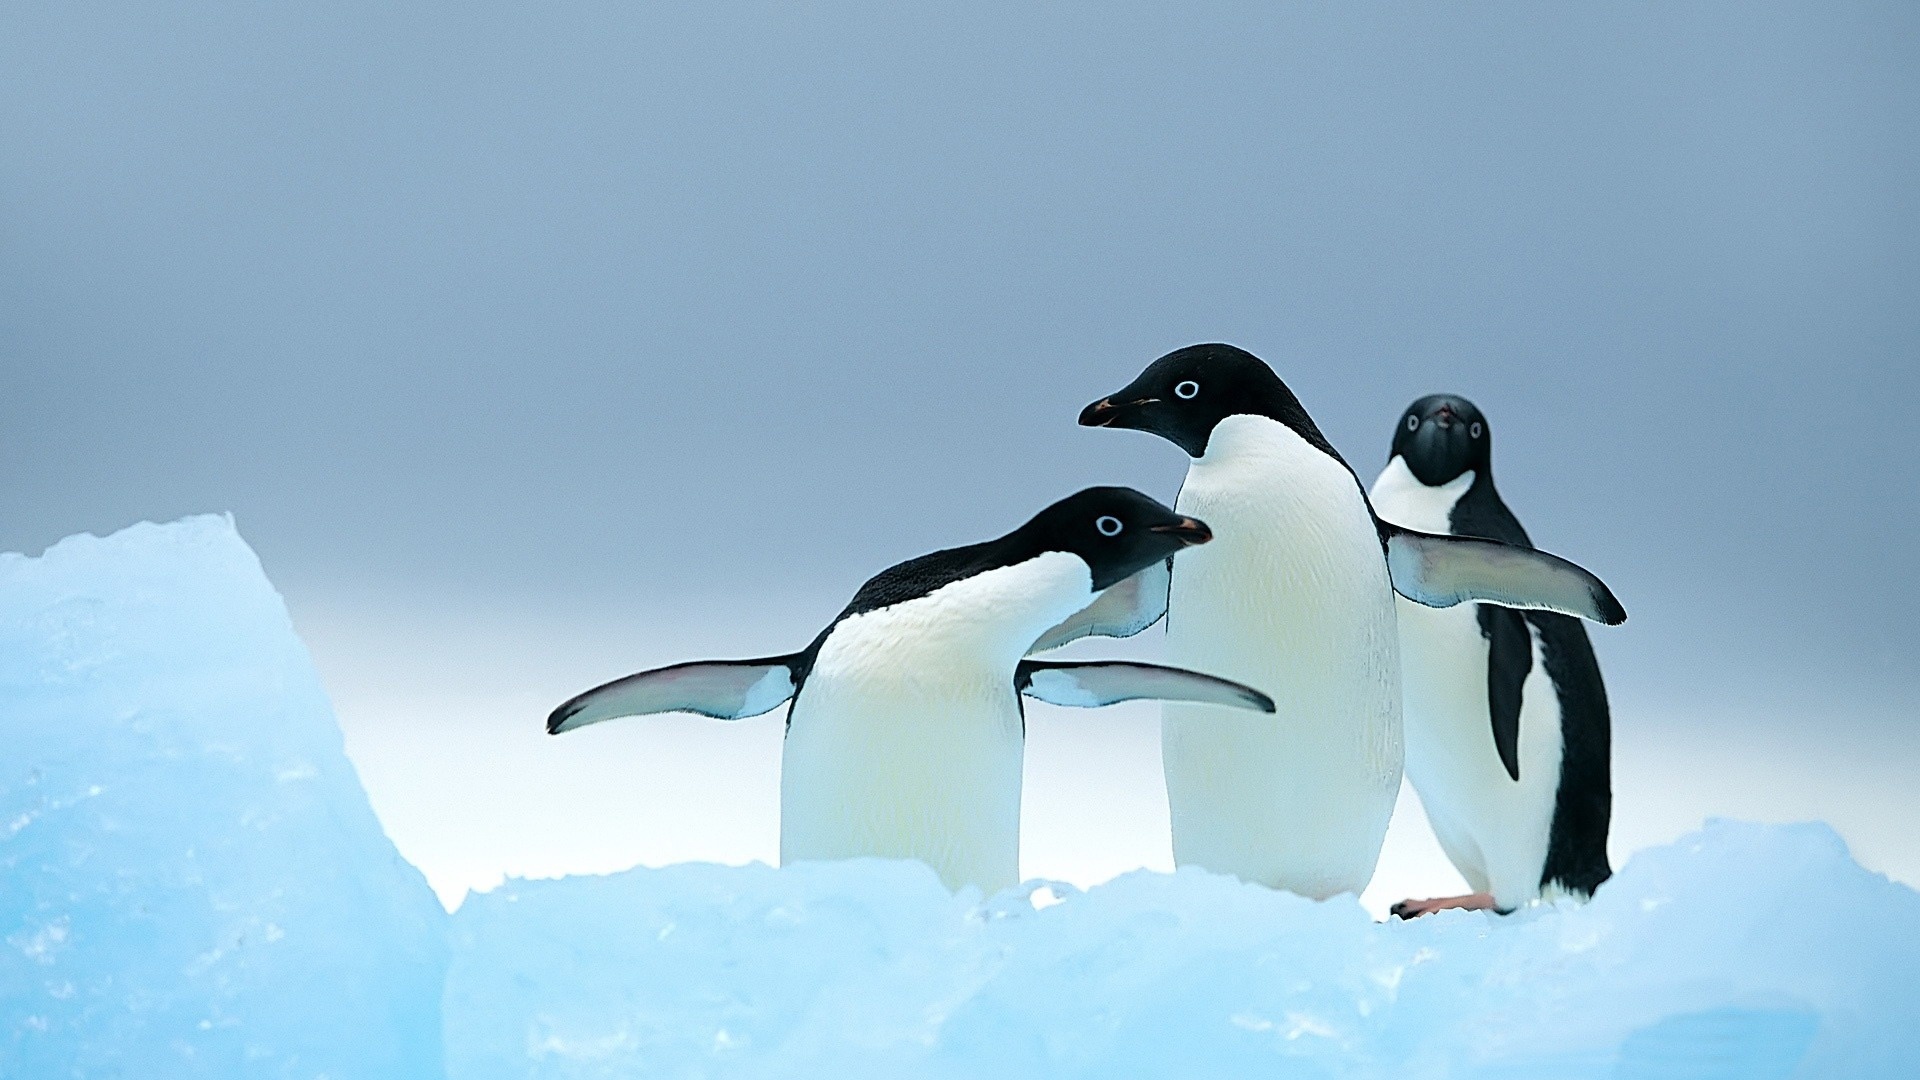 Cute penguins, Kawaii art, Adorable desktops, Penguin lovers' delight, 1920x1080 Full HD Desktop